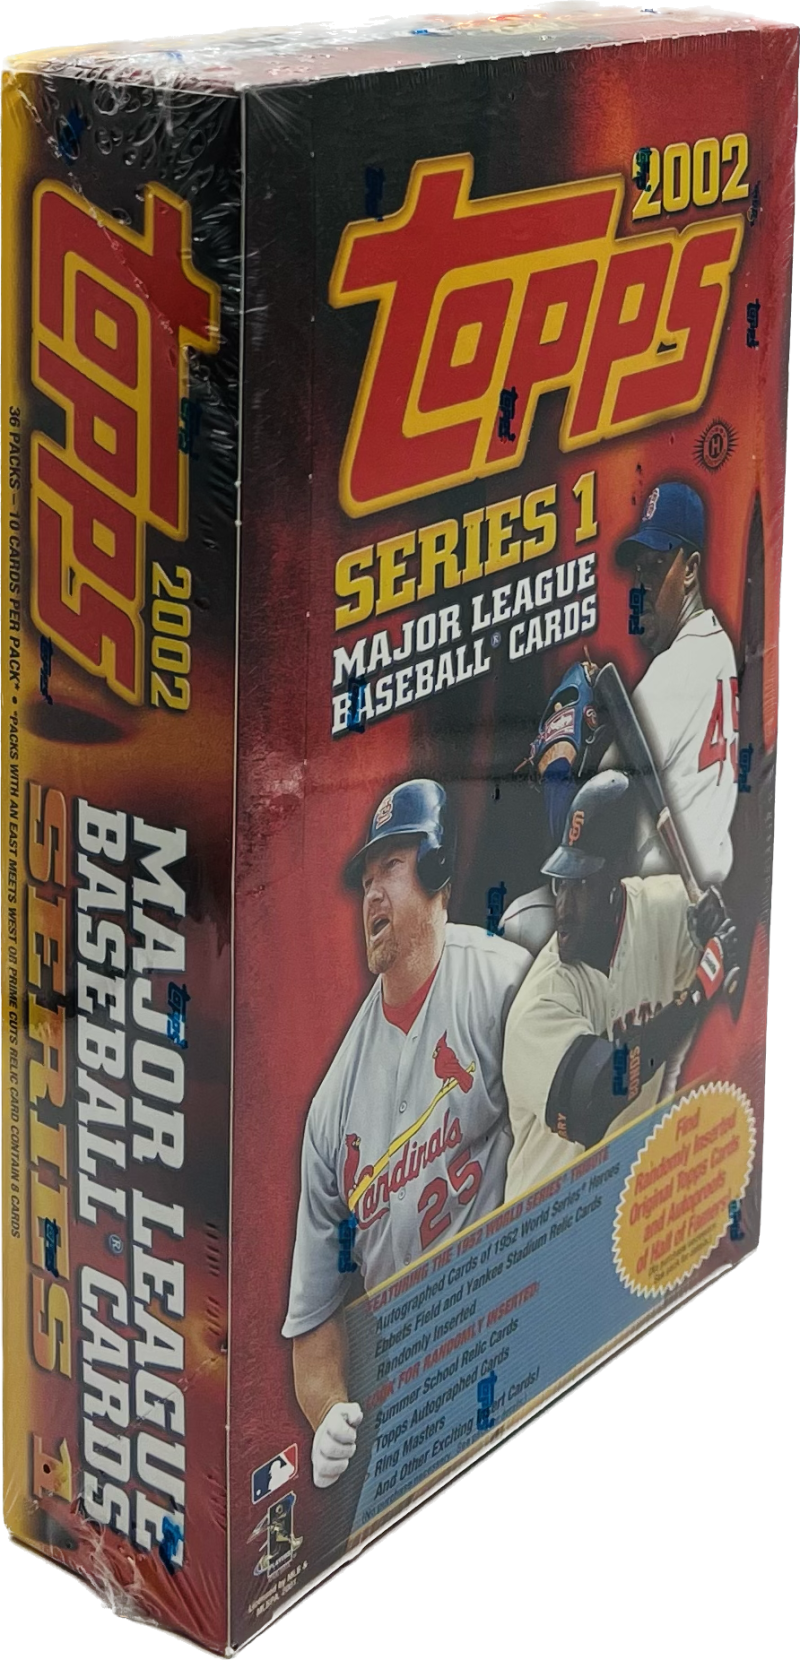 2002 Topps Series 1 Baseball Hobby Box Image 1